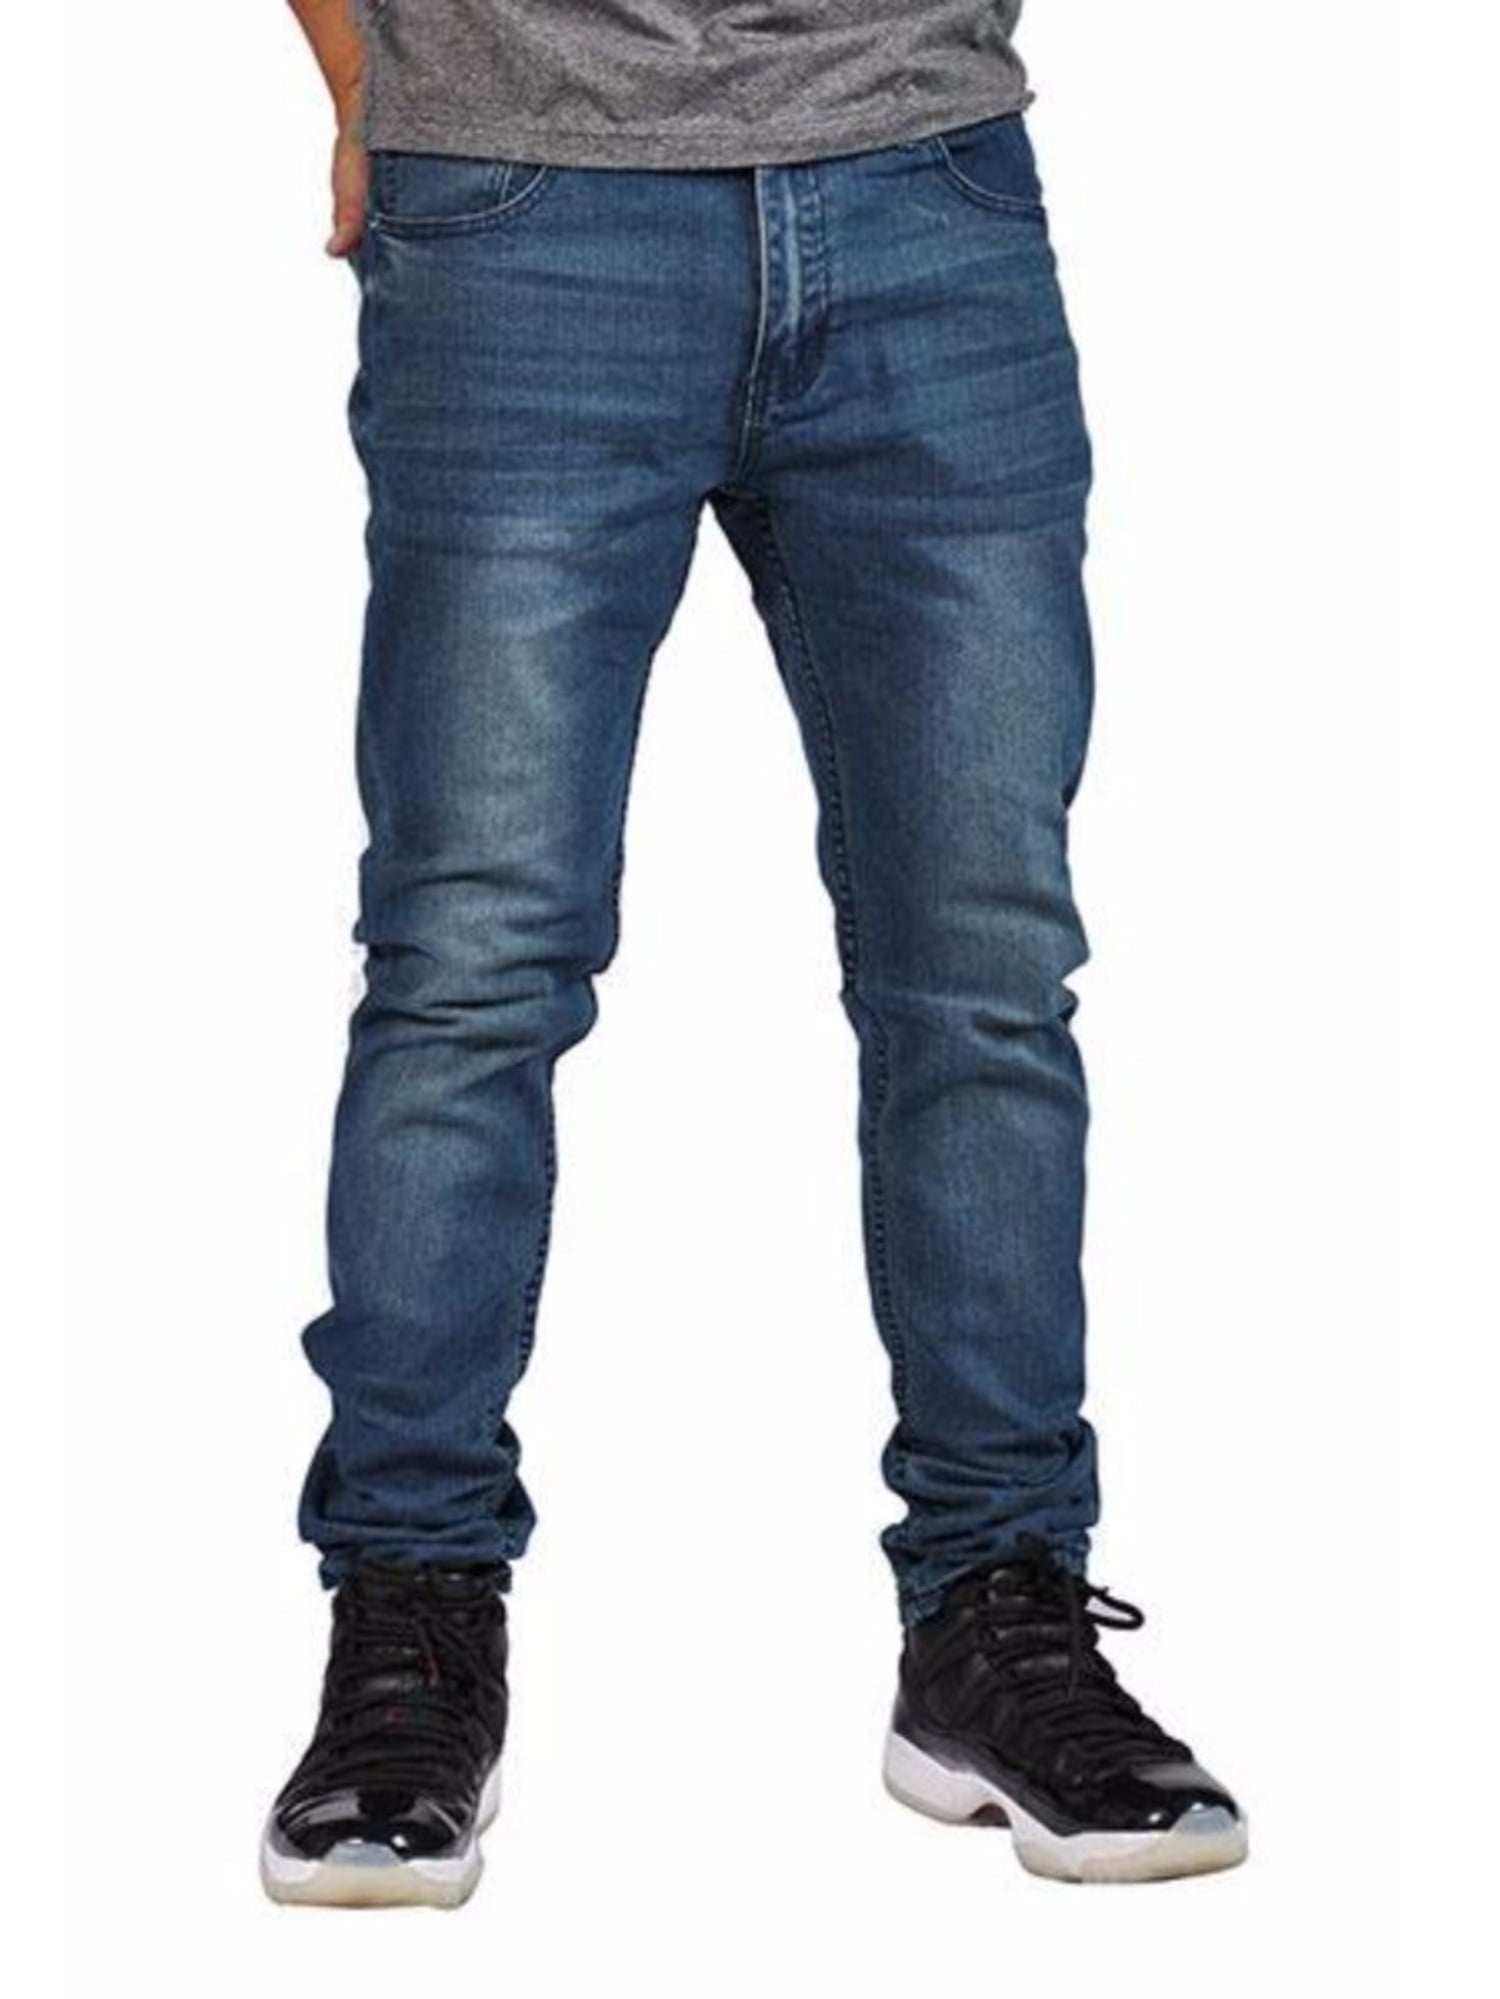 Indigo People Men's Denim Jeans Skinny Fit Tapered Leg 27023 Blue 32x32 ...